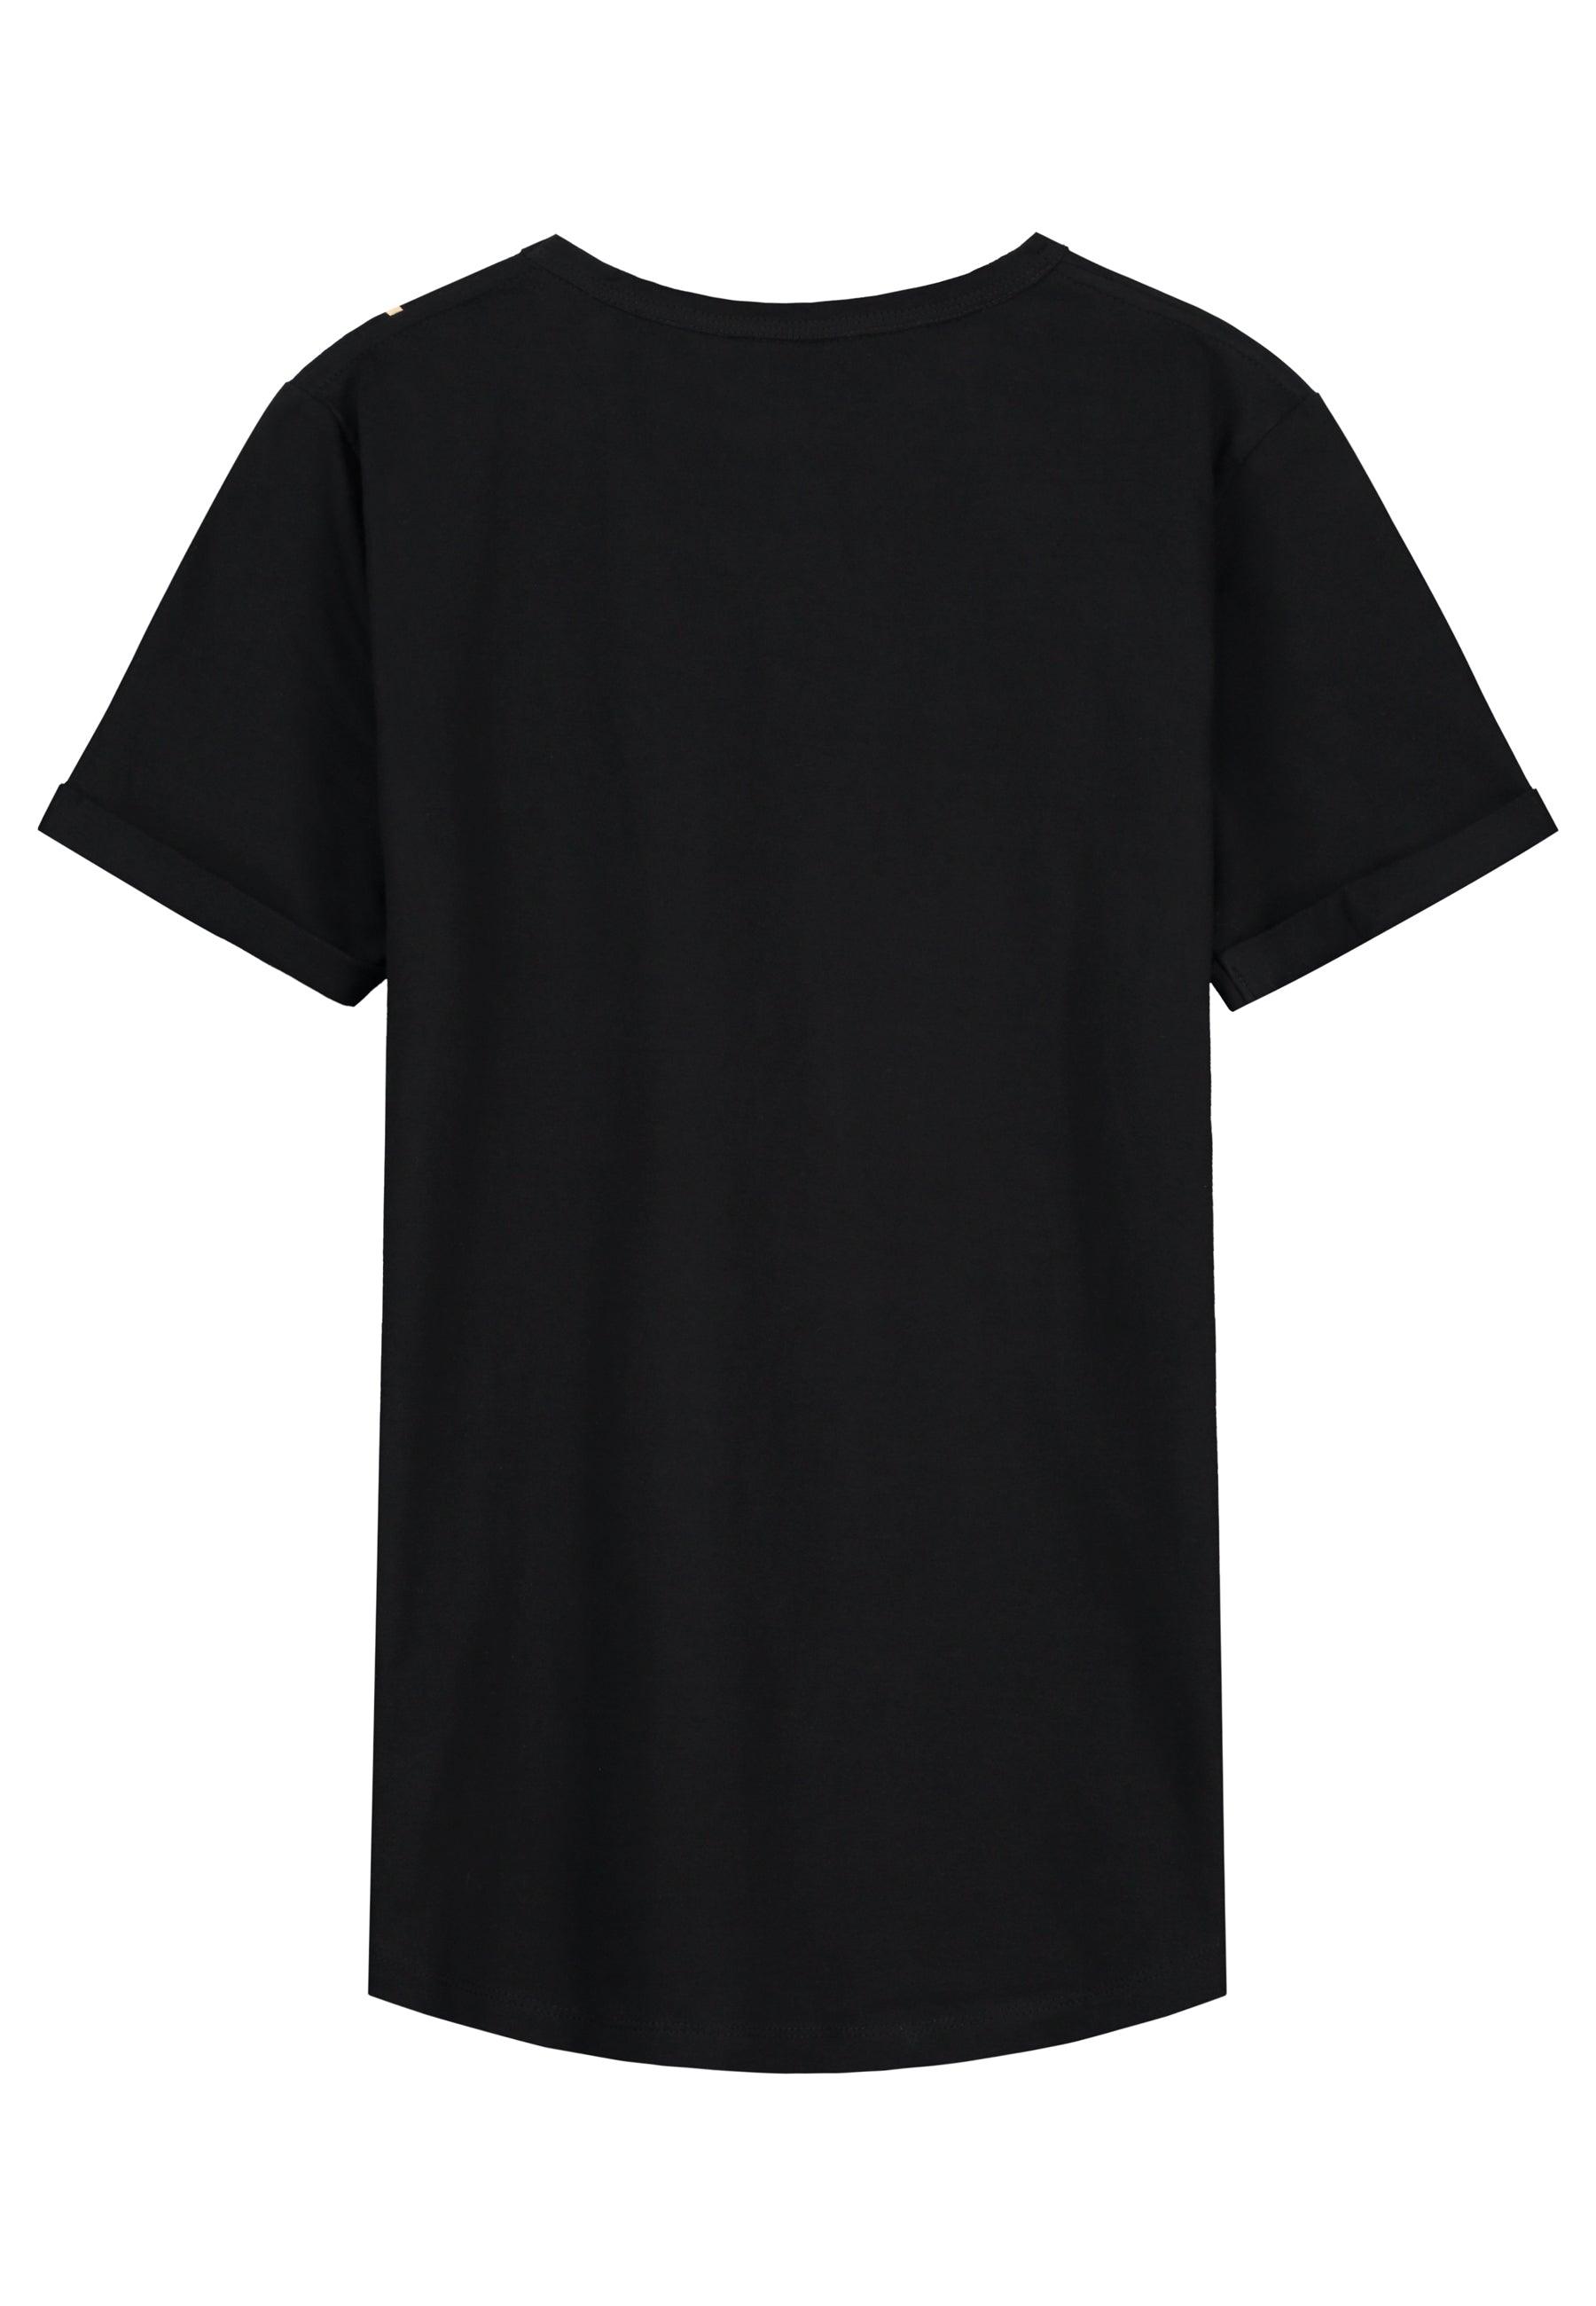 Indigo T-shirt Black